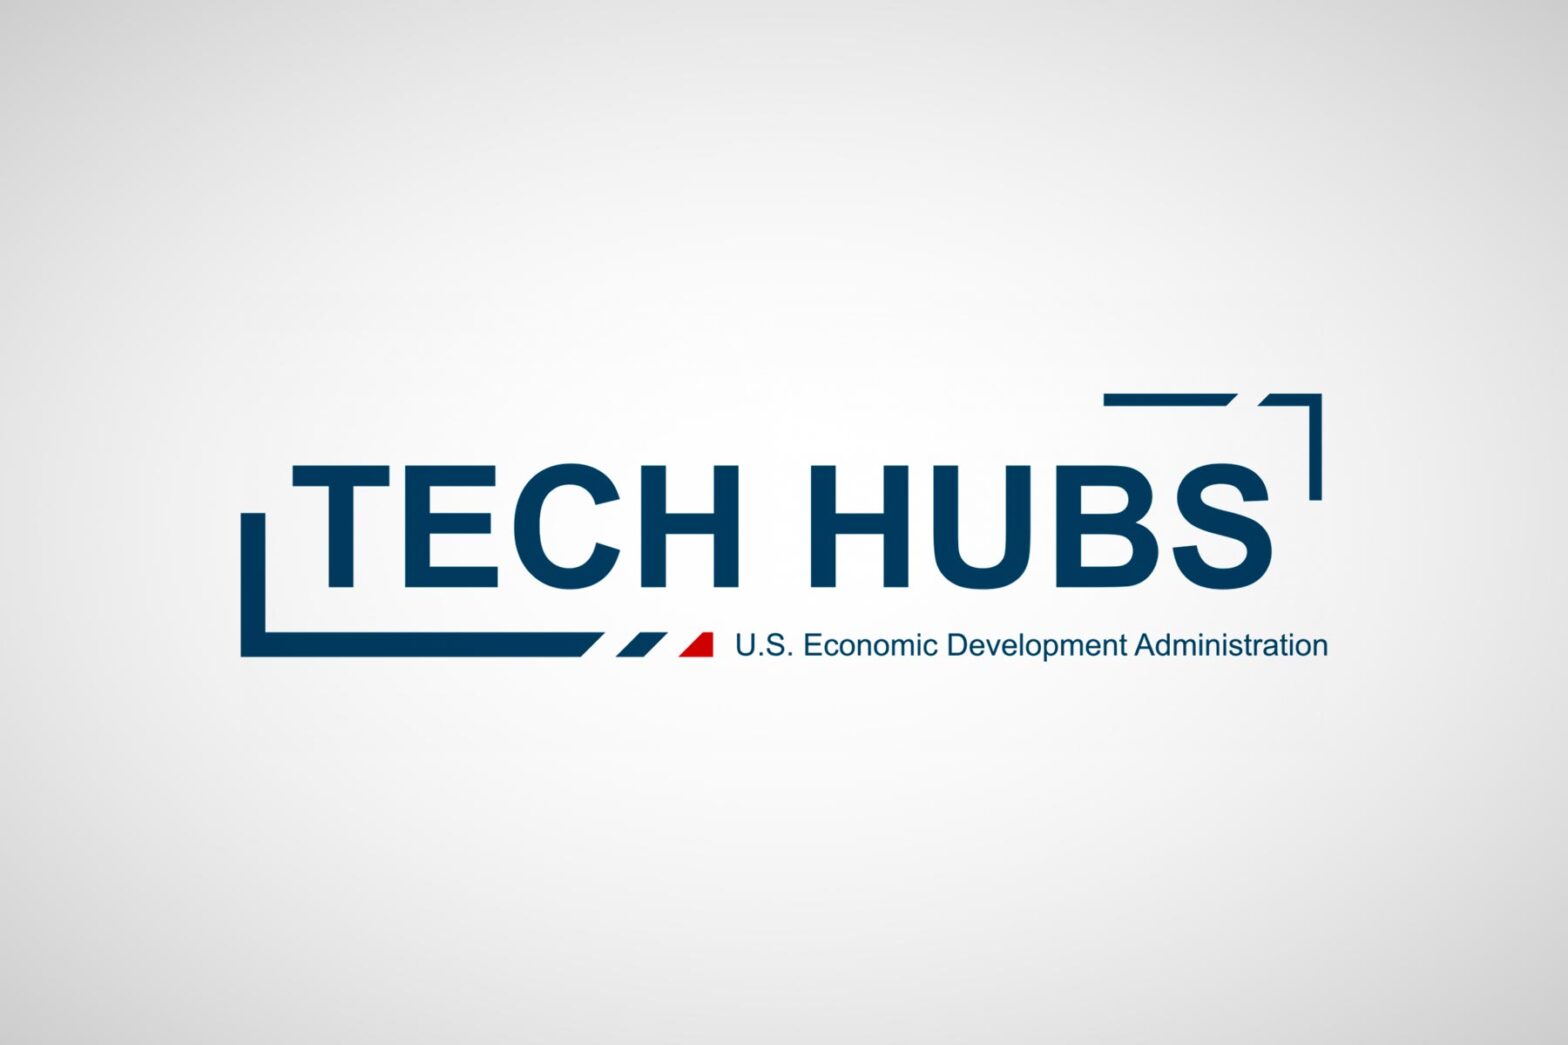 Tech hubs program logo